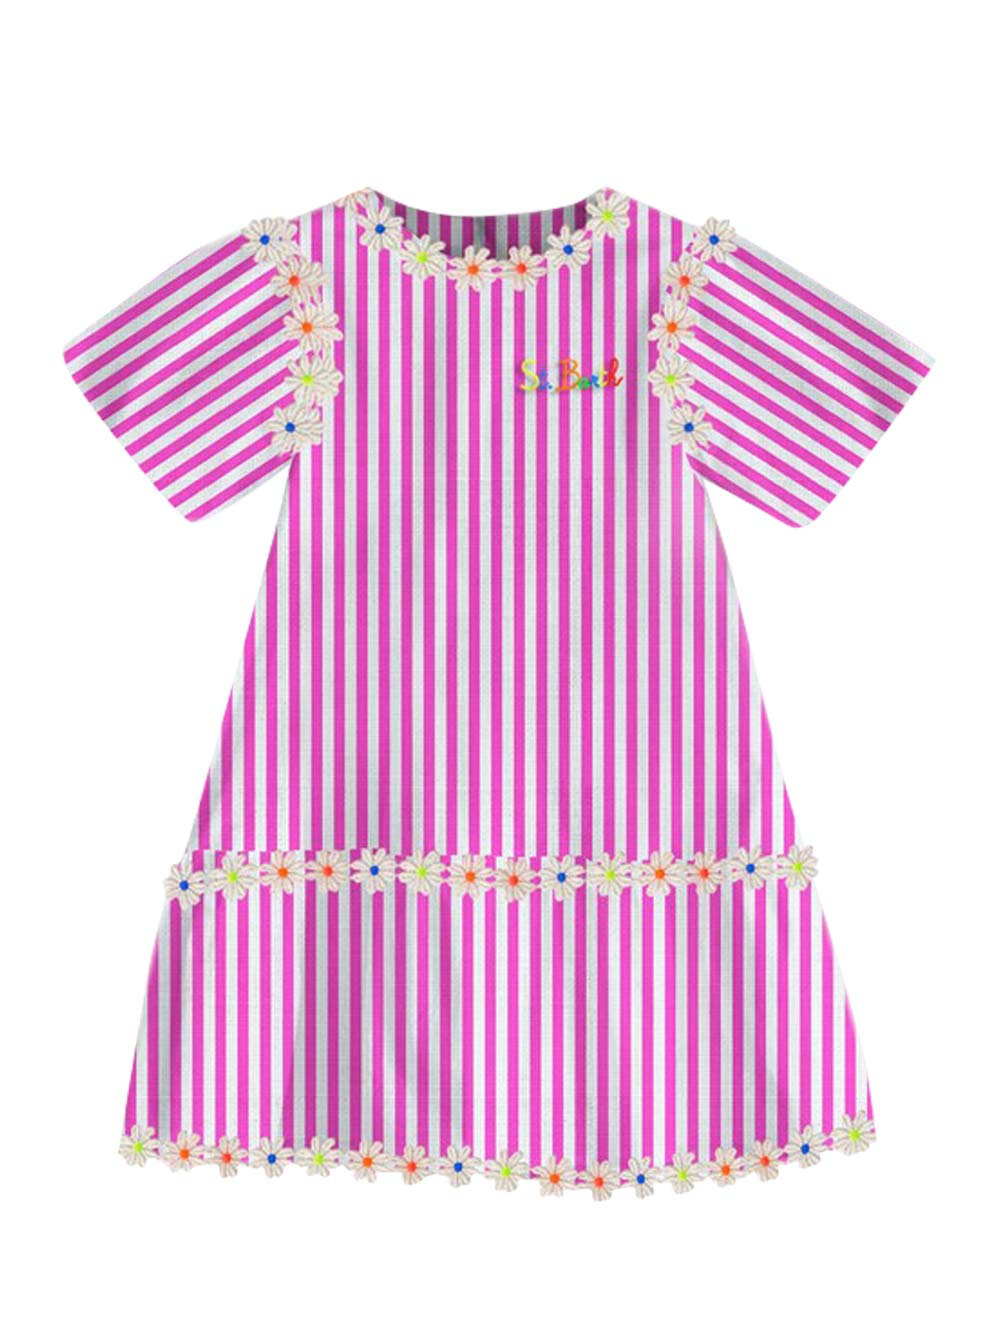 Rosemary Stripes Dress